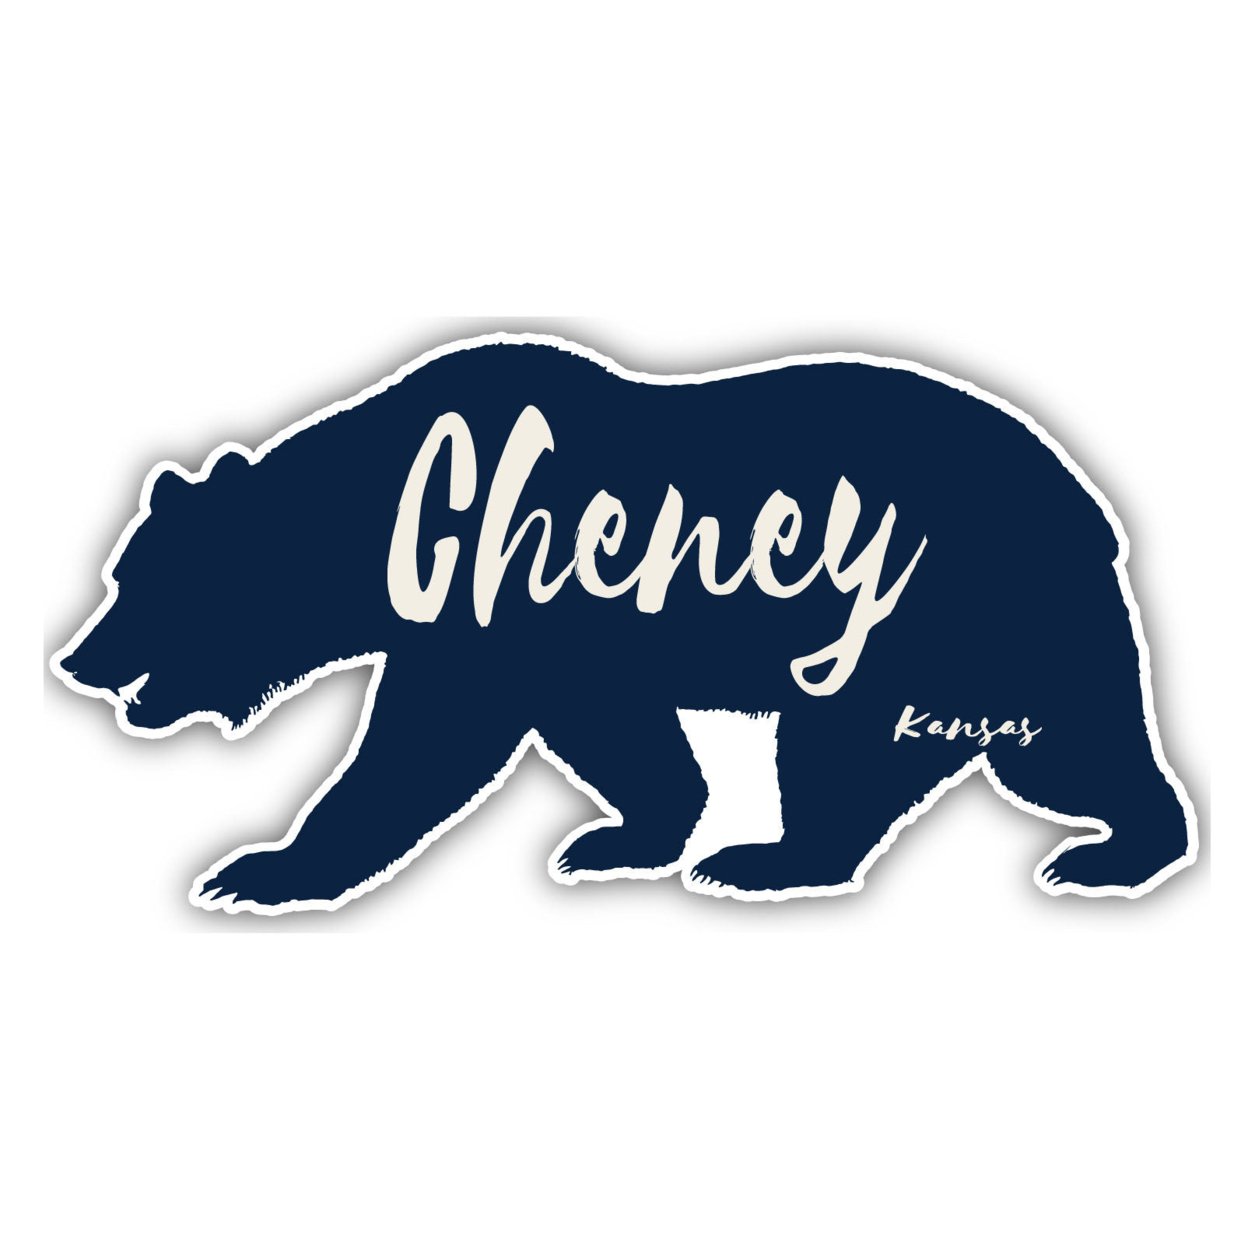 Cheney Kansas Souvenir Decorative Stickers (Choose Theme And Size) - 4-Pack, 12-Inch, Bear